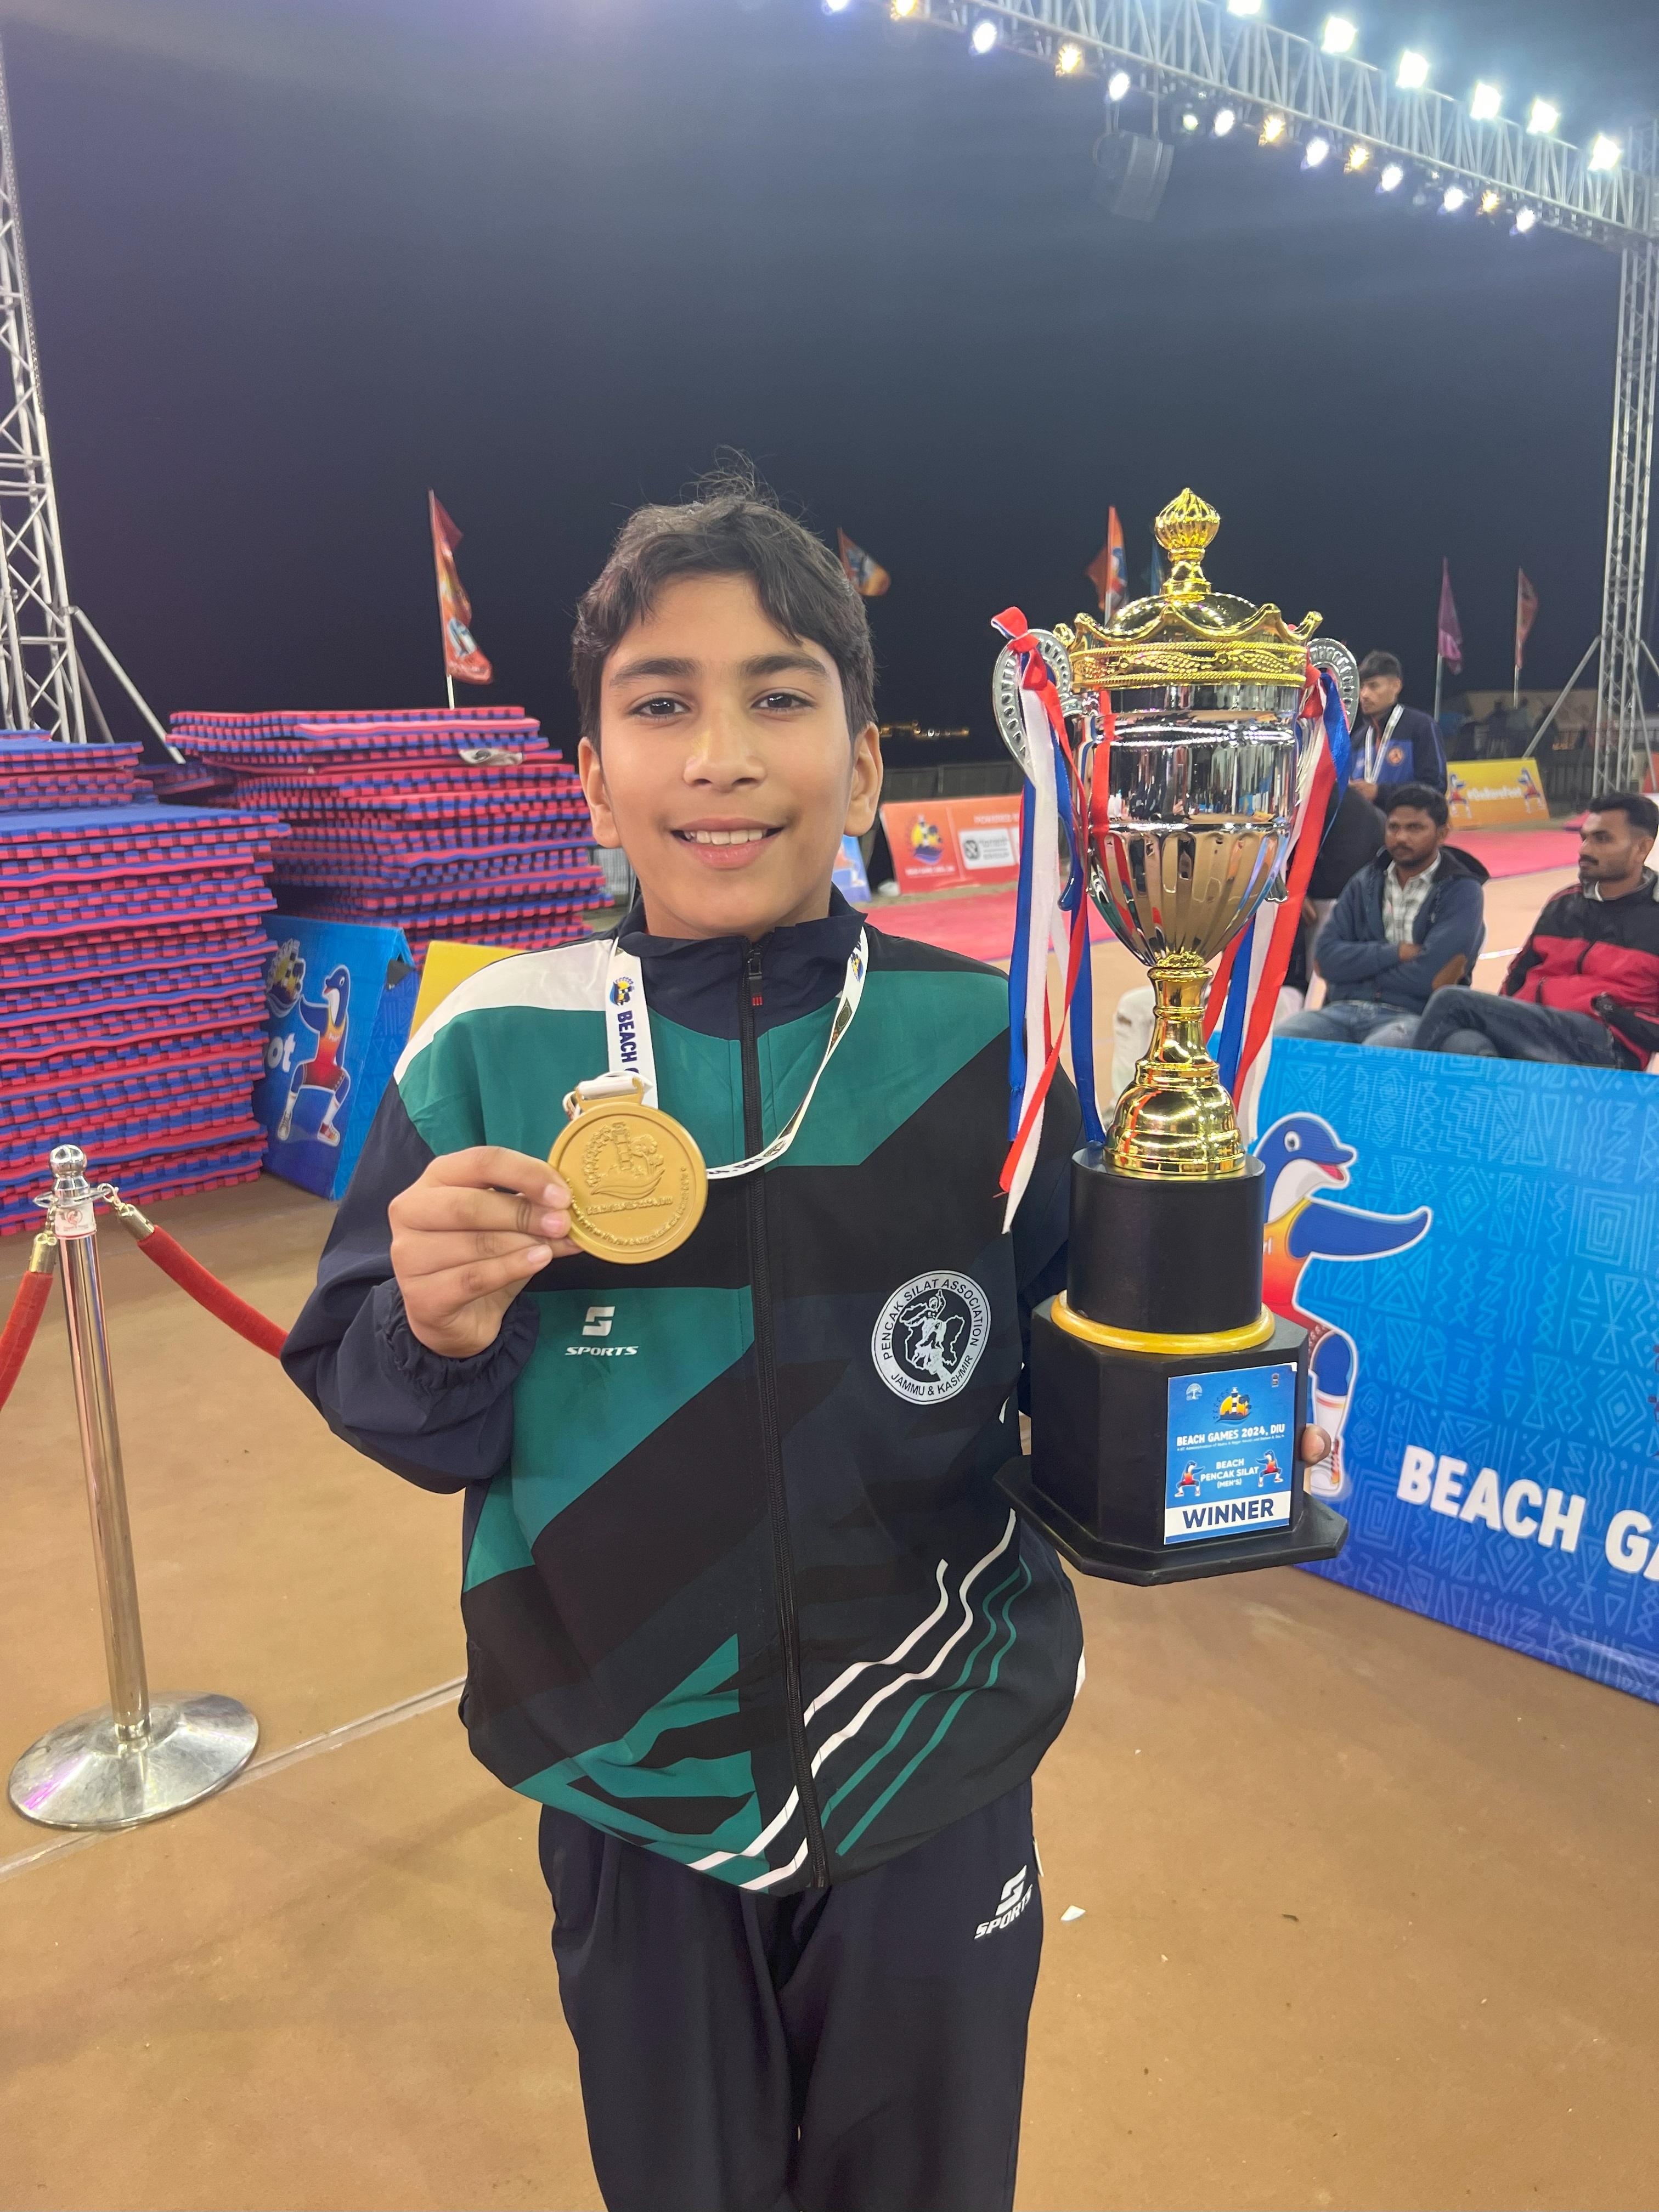 'Ahmed Taha Masoody: A Pint-Sized Powerhouse Clinches Gold in Pencak Silat at Daman and Diu Beach Games National'